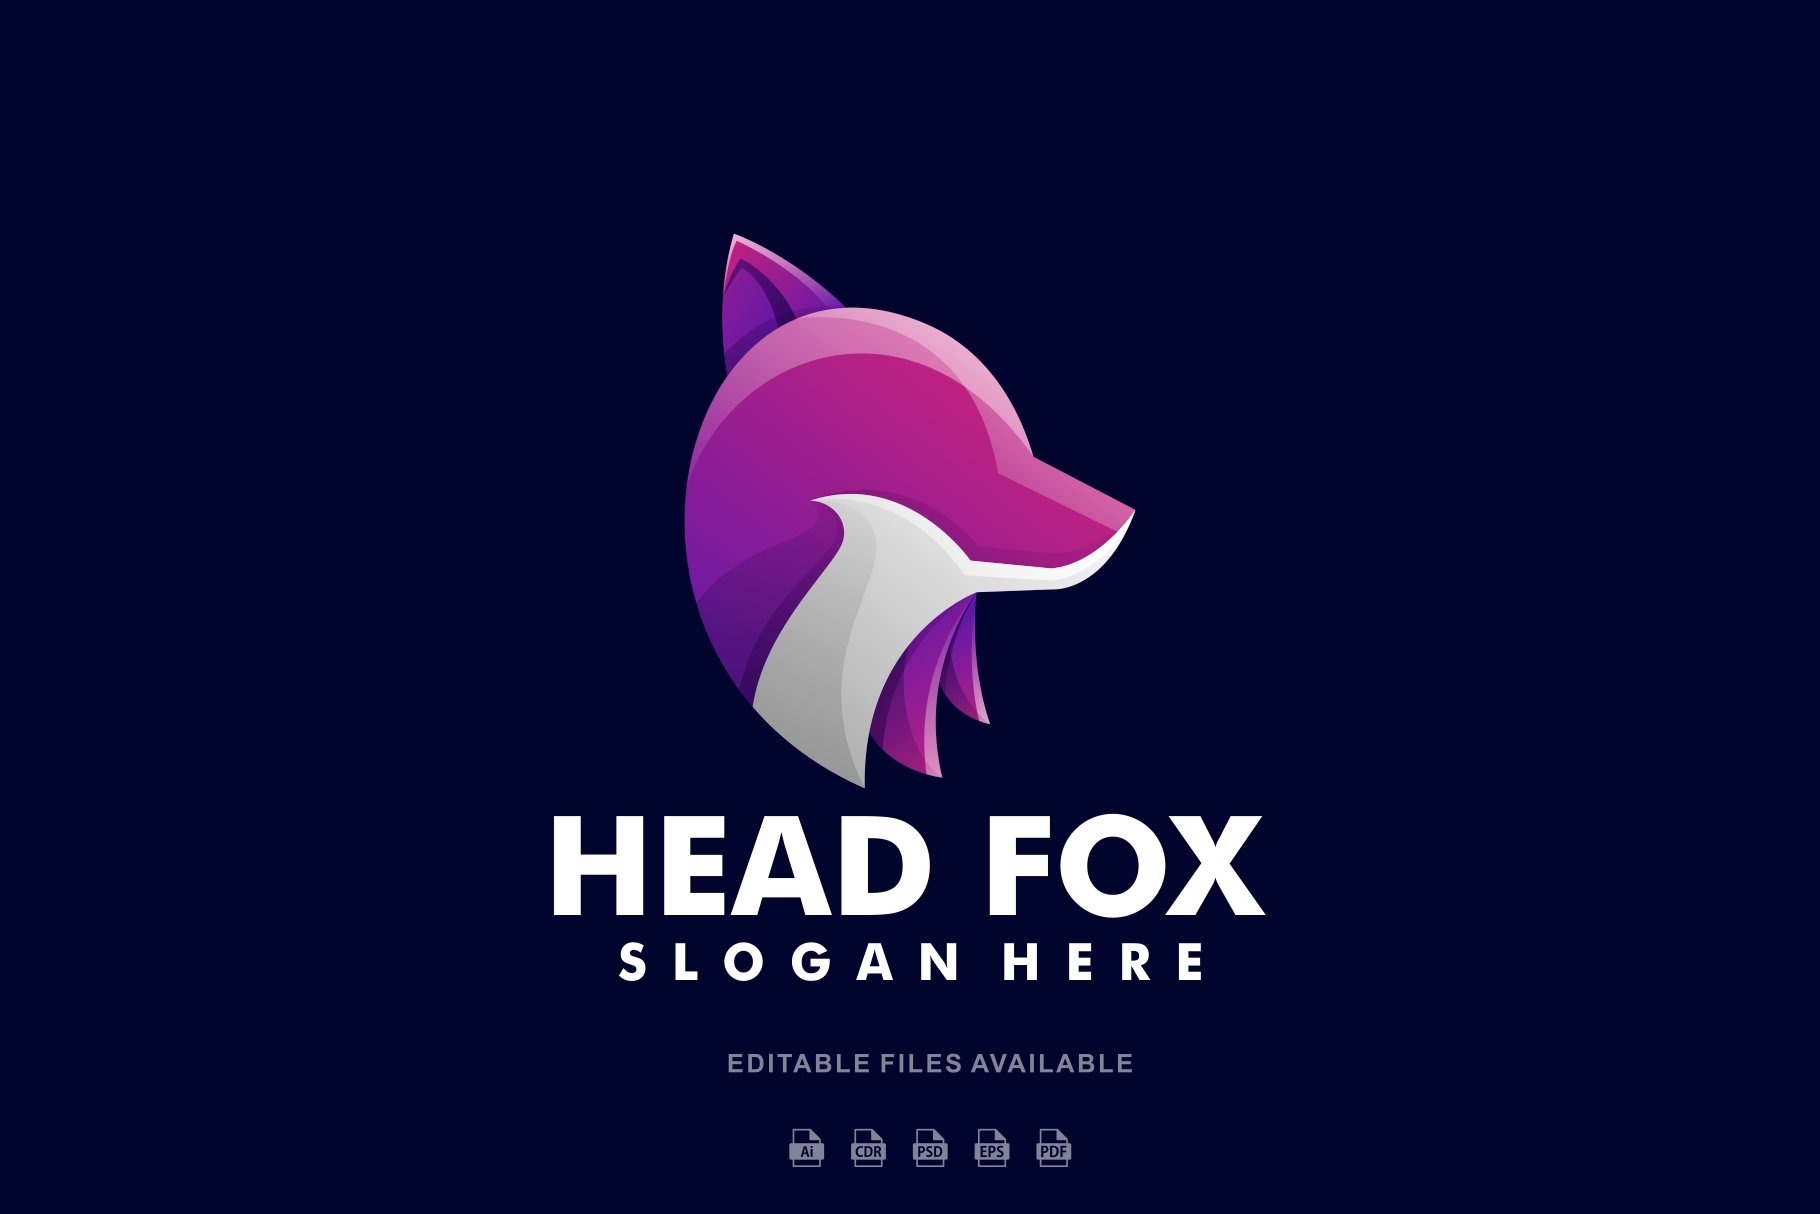 Head Fox Colorful Logo cover image.